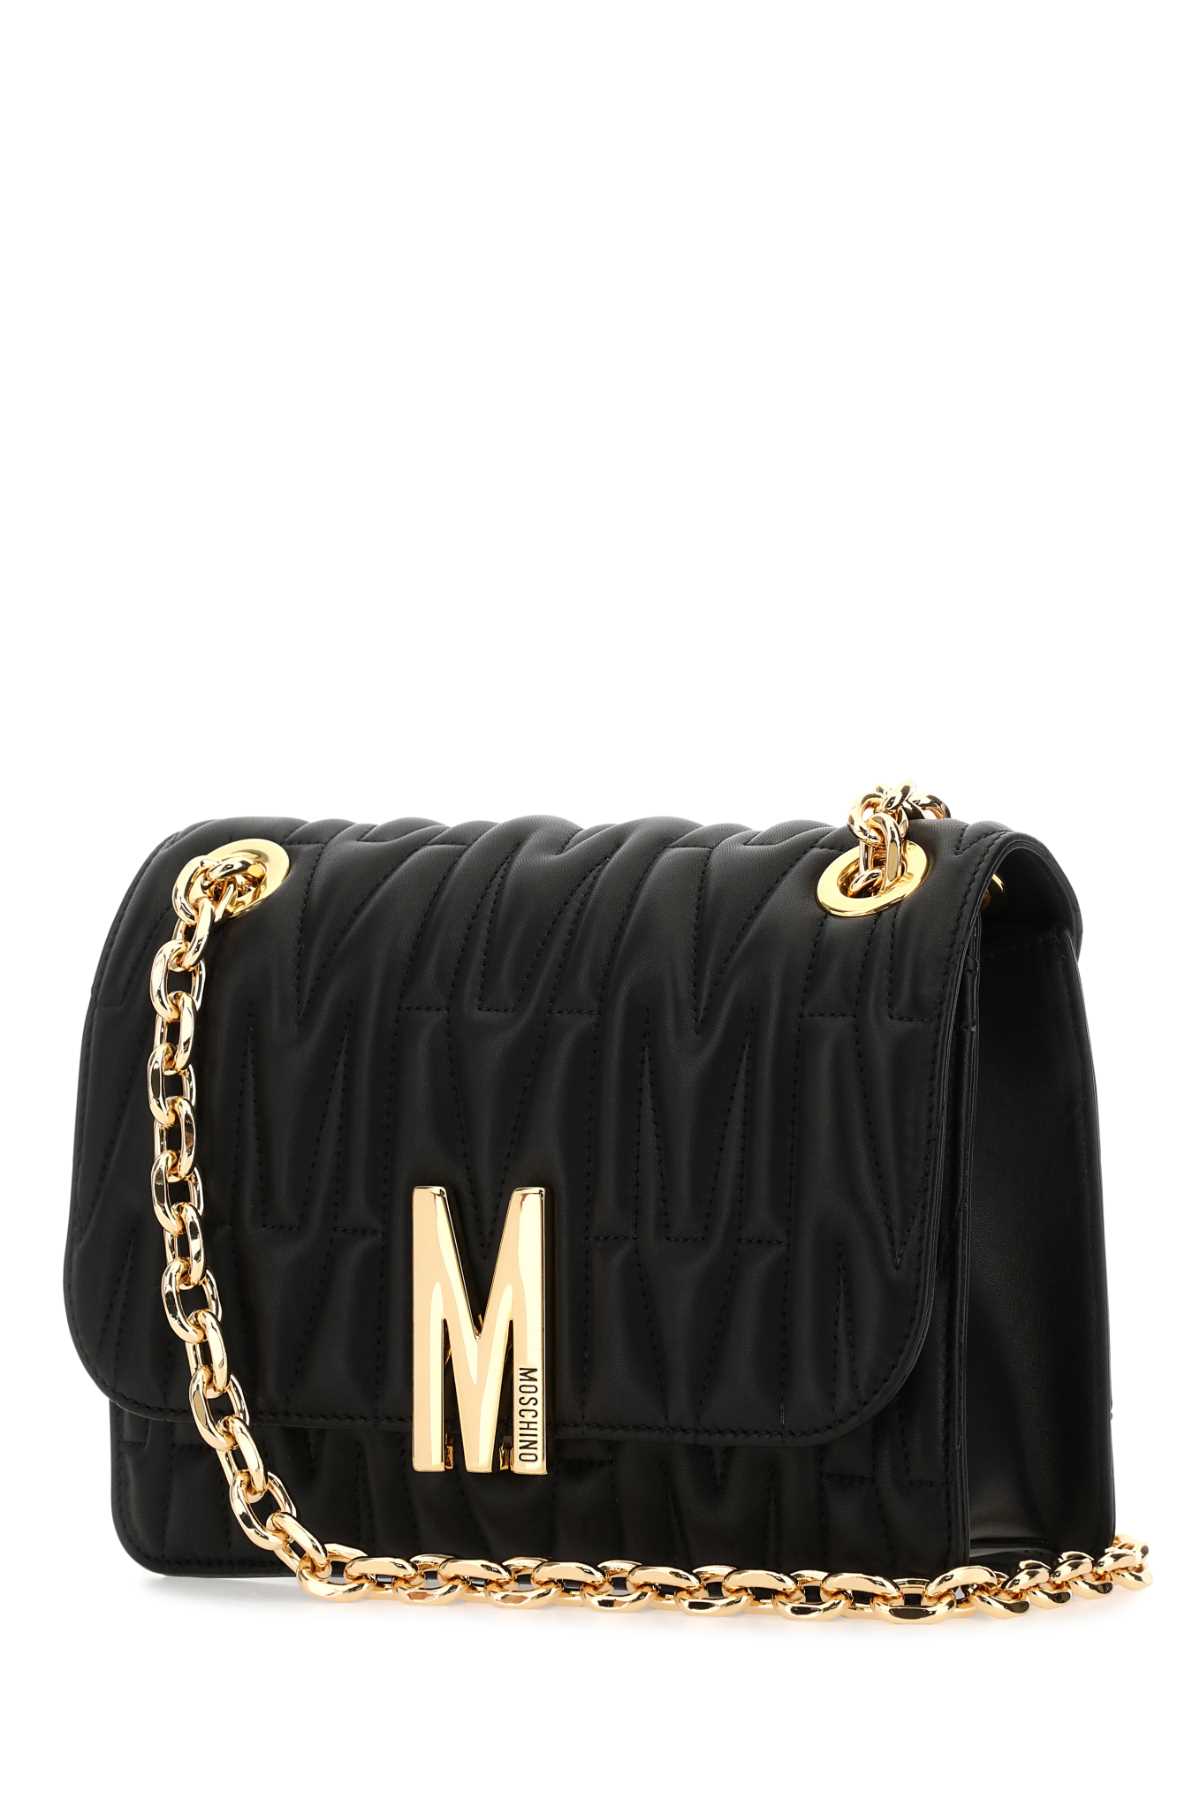 Moschino Black Leather M Crossbody Bag In 1555